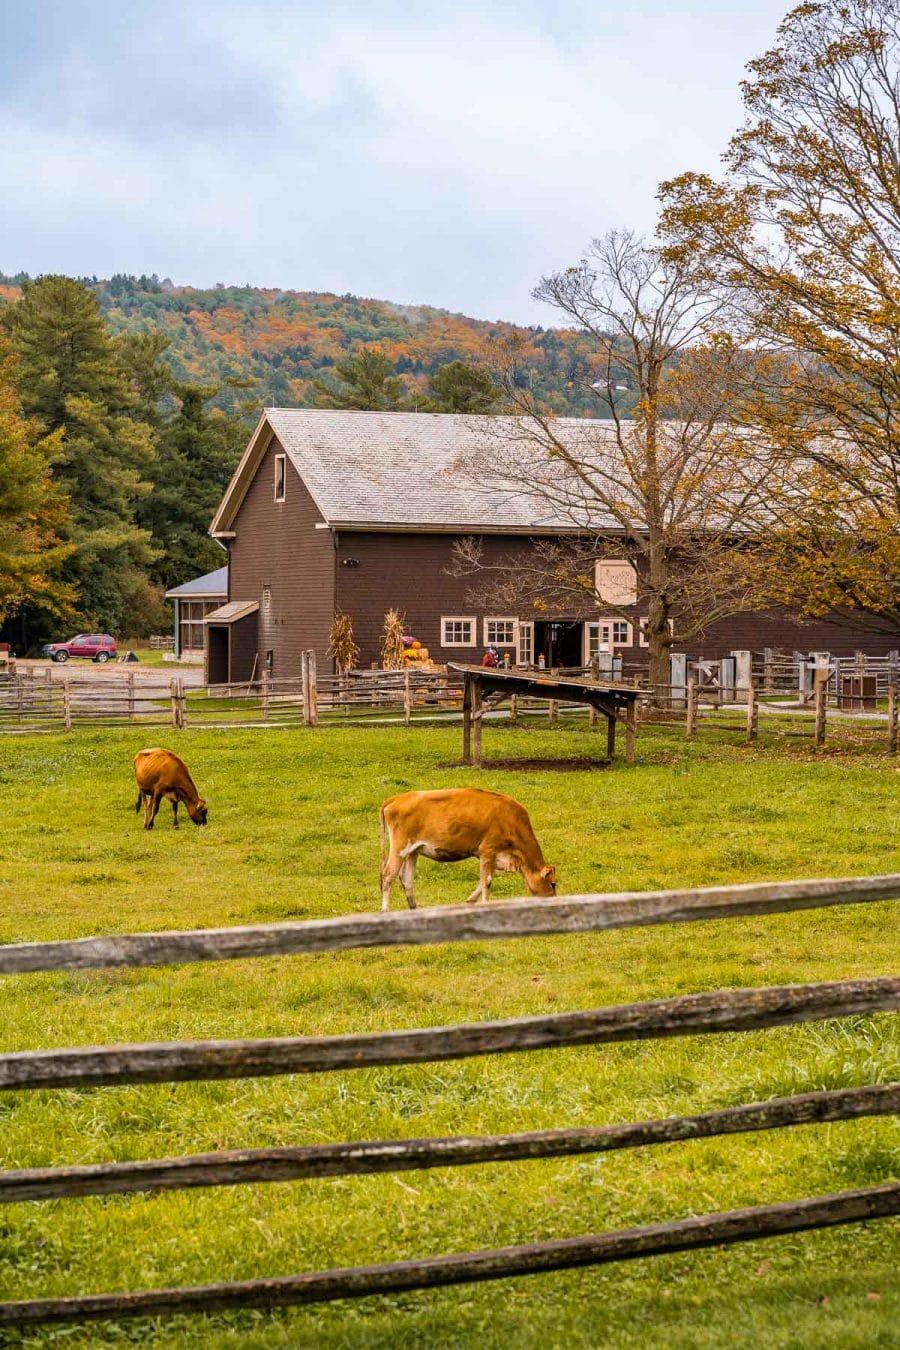 Billings Farm and Museum in Woodstock VT